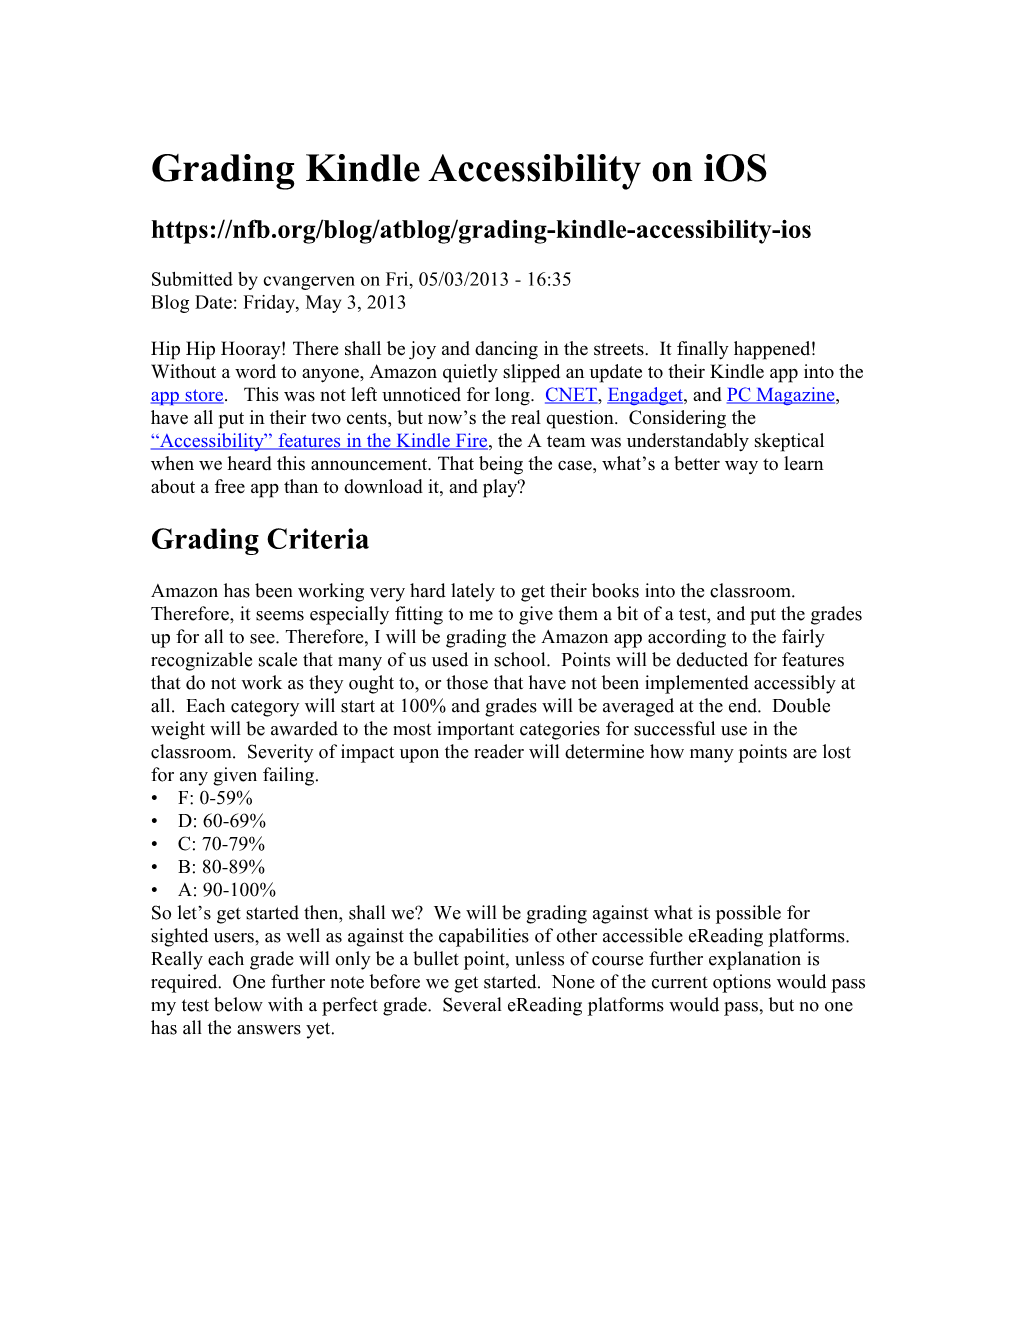 Grading Kindle Accessibility on Ios